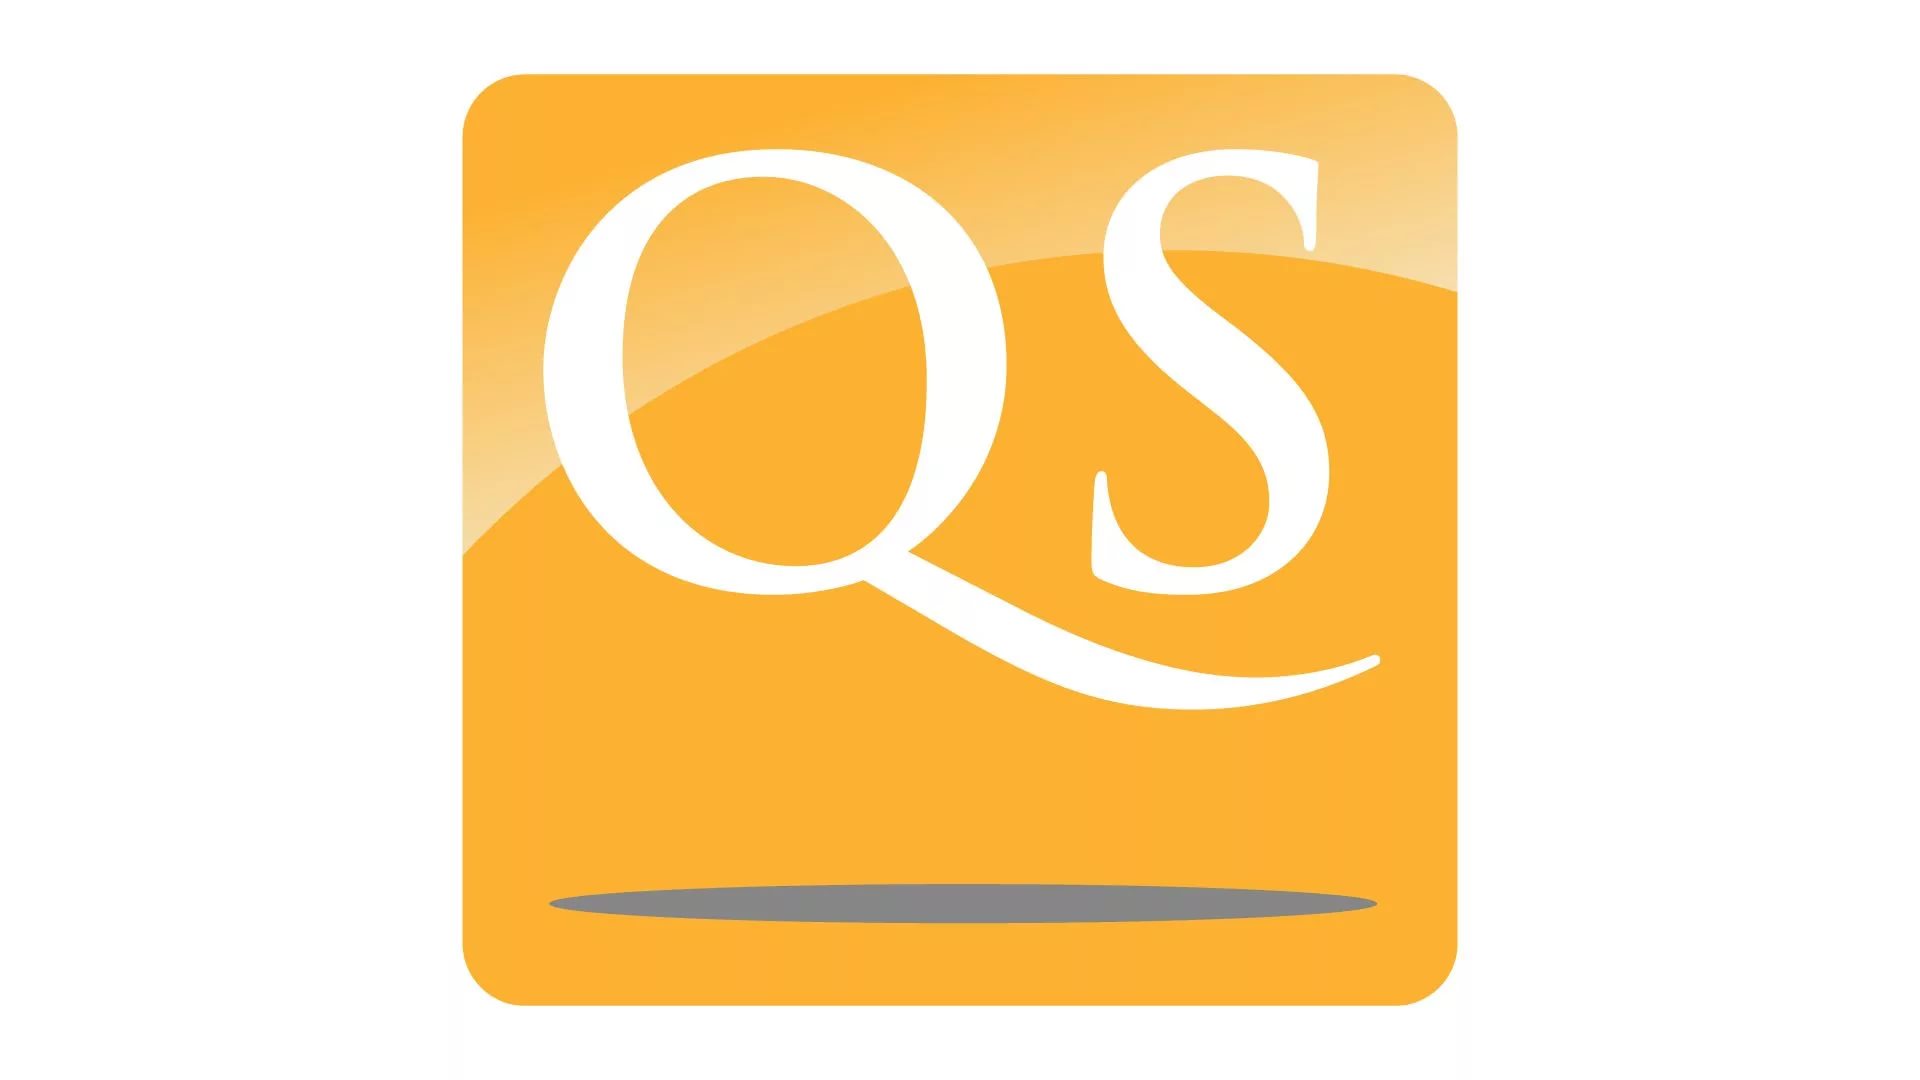 Qs world ranking. QS логотип. QS World University rankings. QS World University rankings logo. Рейтинг QS.